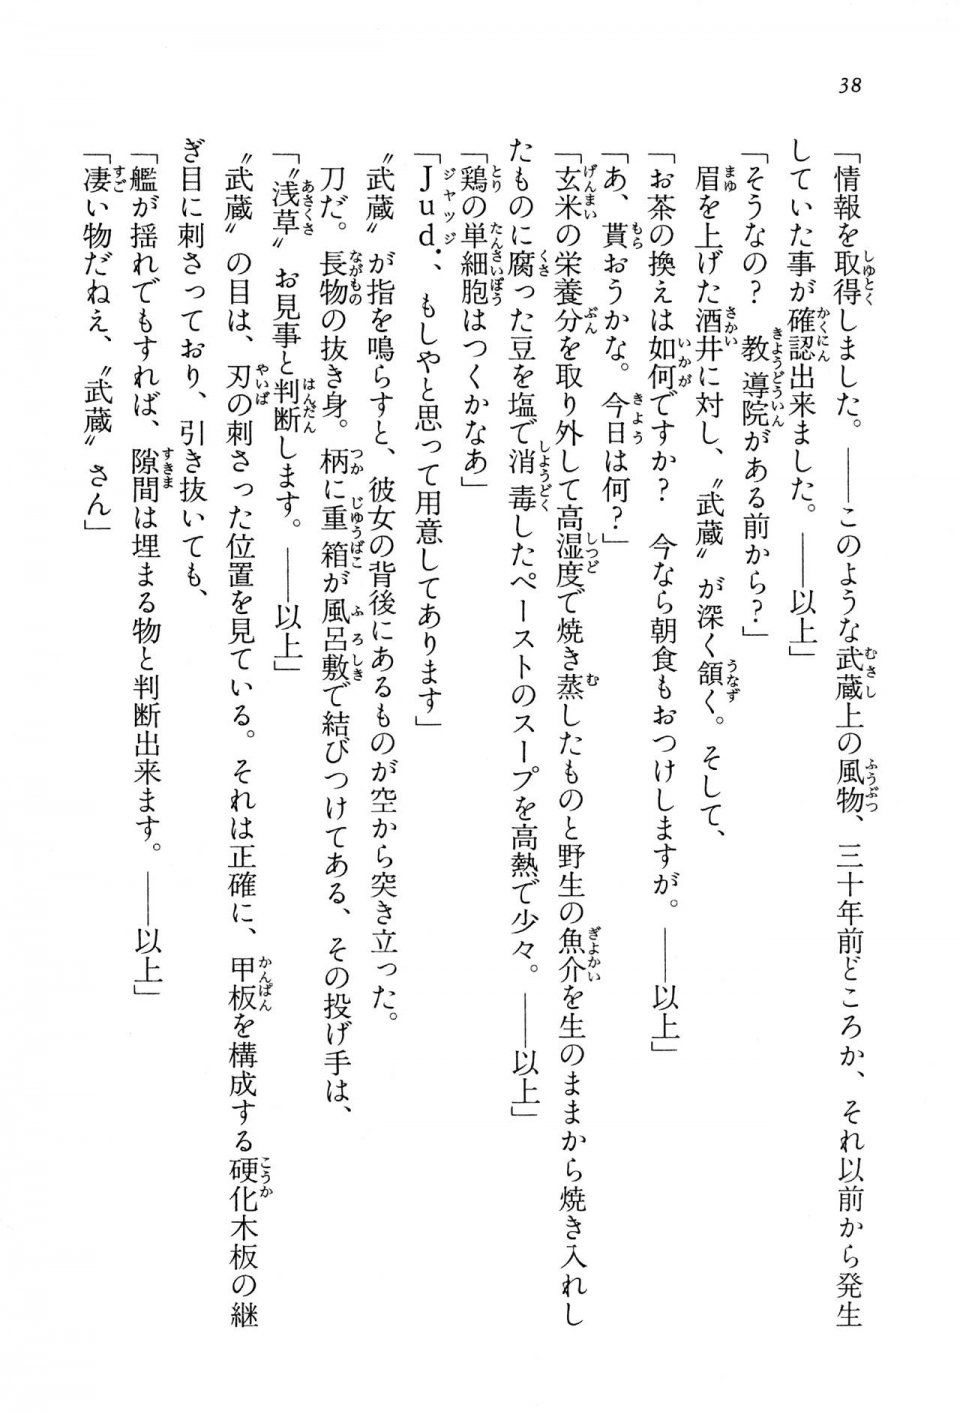 Kyoukai Senjou no Horizon BD Special Mininovel Vol 5(3A) - Photo #42